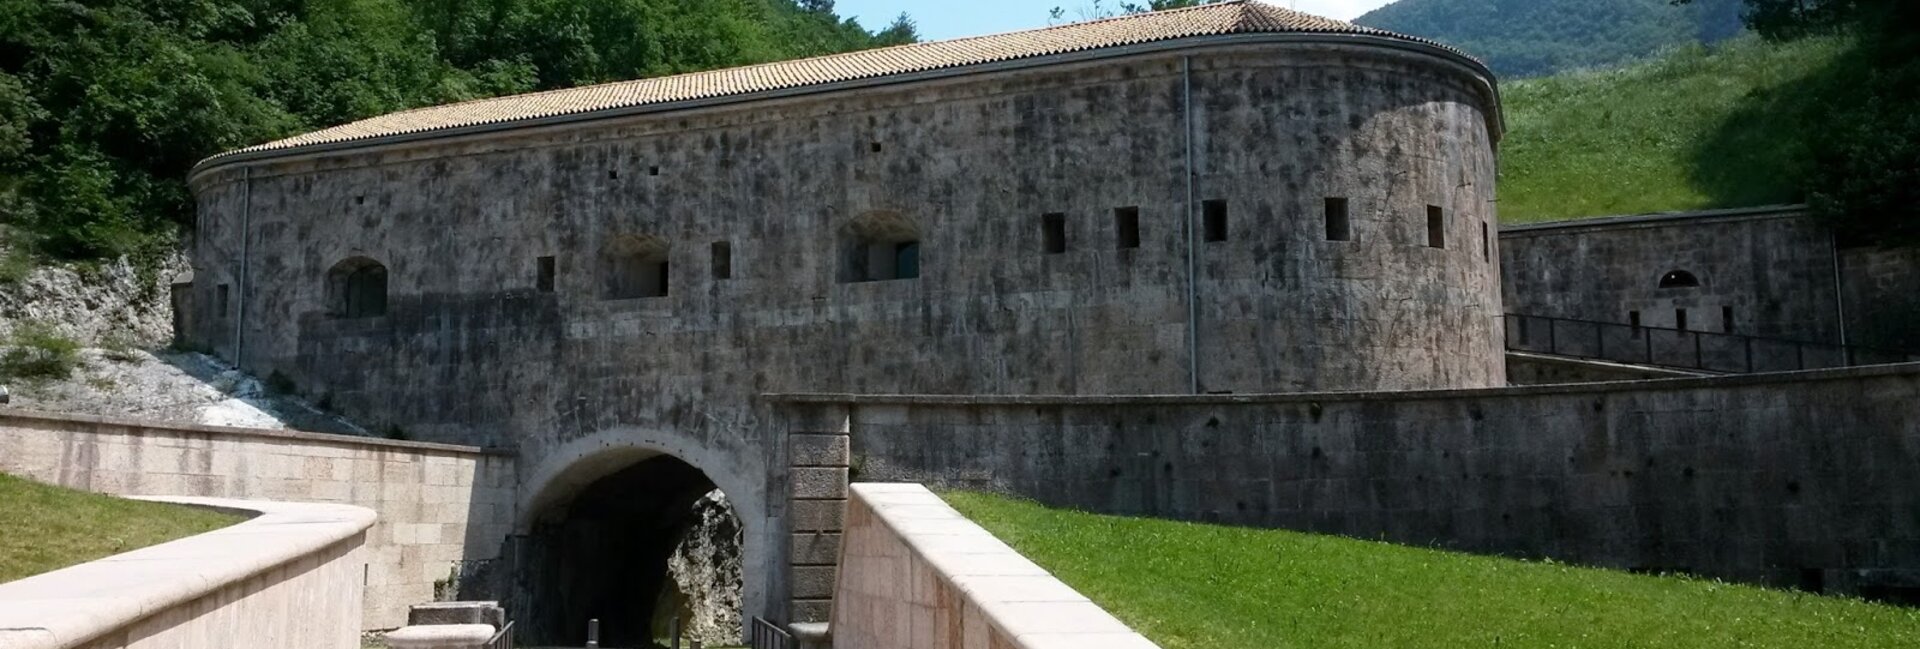 Fort Cadine Bus de Vela